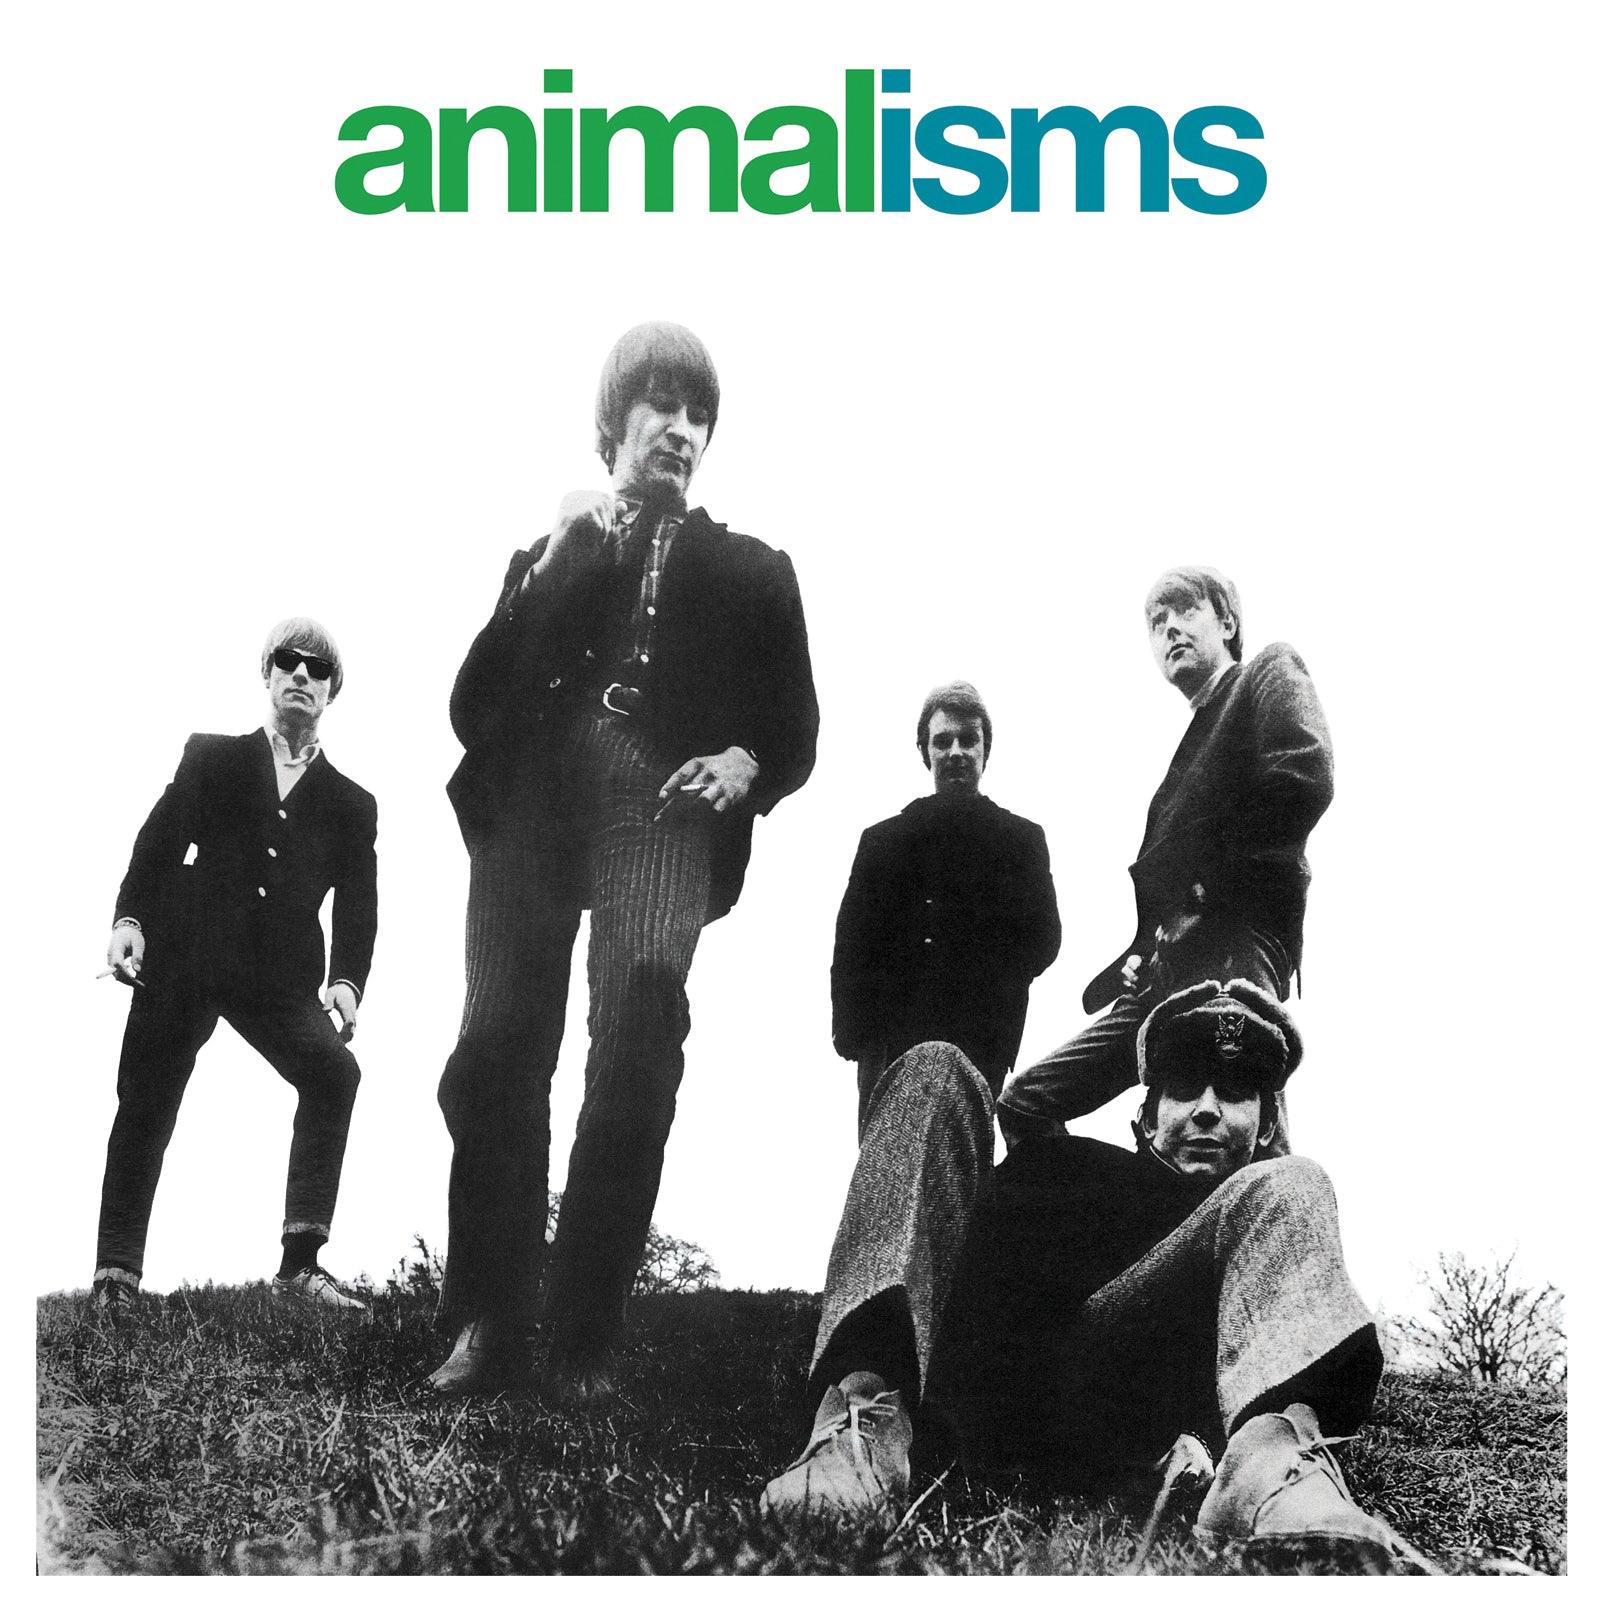 The Animals - Animalisms - Vinyl LP - Secret Records Limited